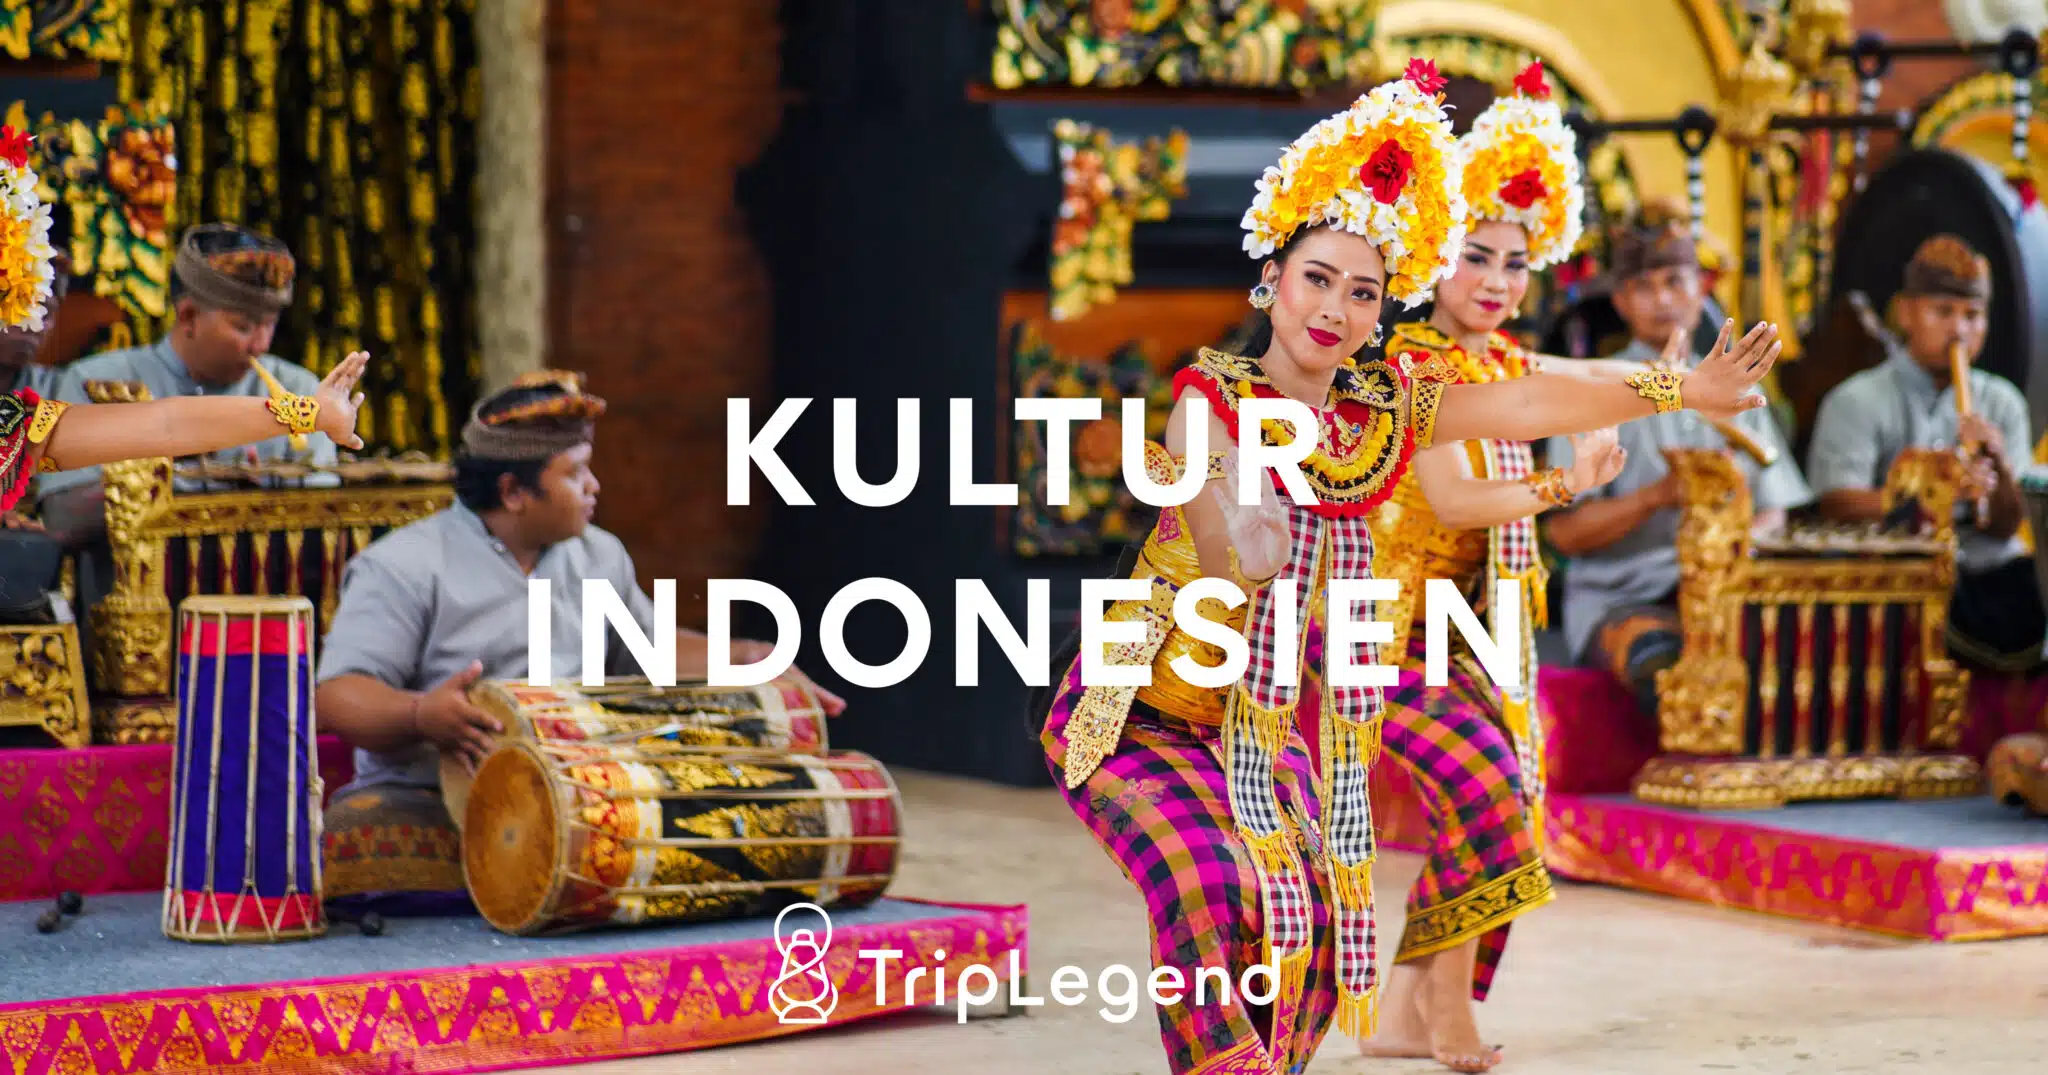 Kultur Indonesien1 Scaled.jpg